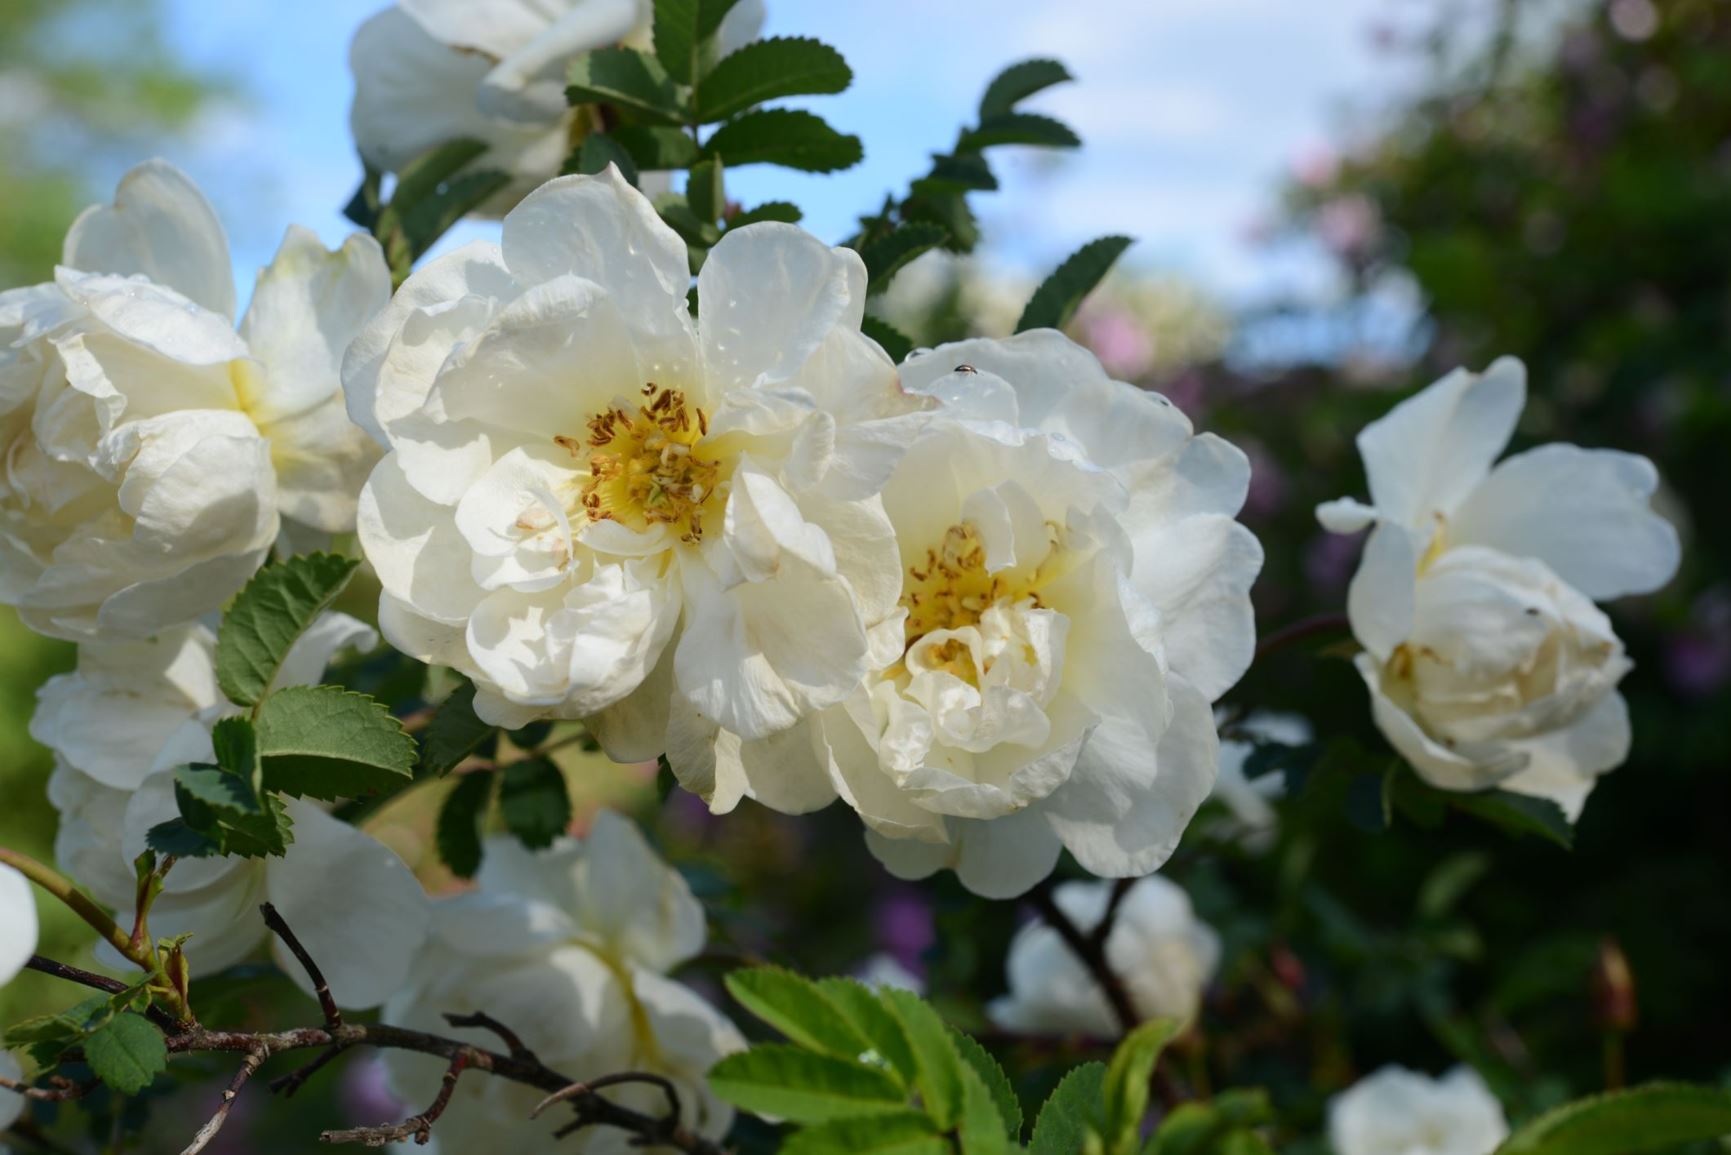 Rosa spinosissima (Pimpinelleroser (HSpn) Group) 'Plena' - 'Double White', 'Finlands Vita Ros'